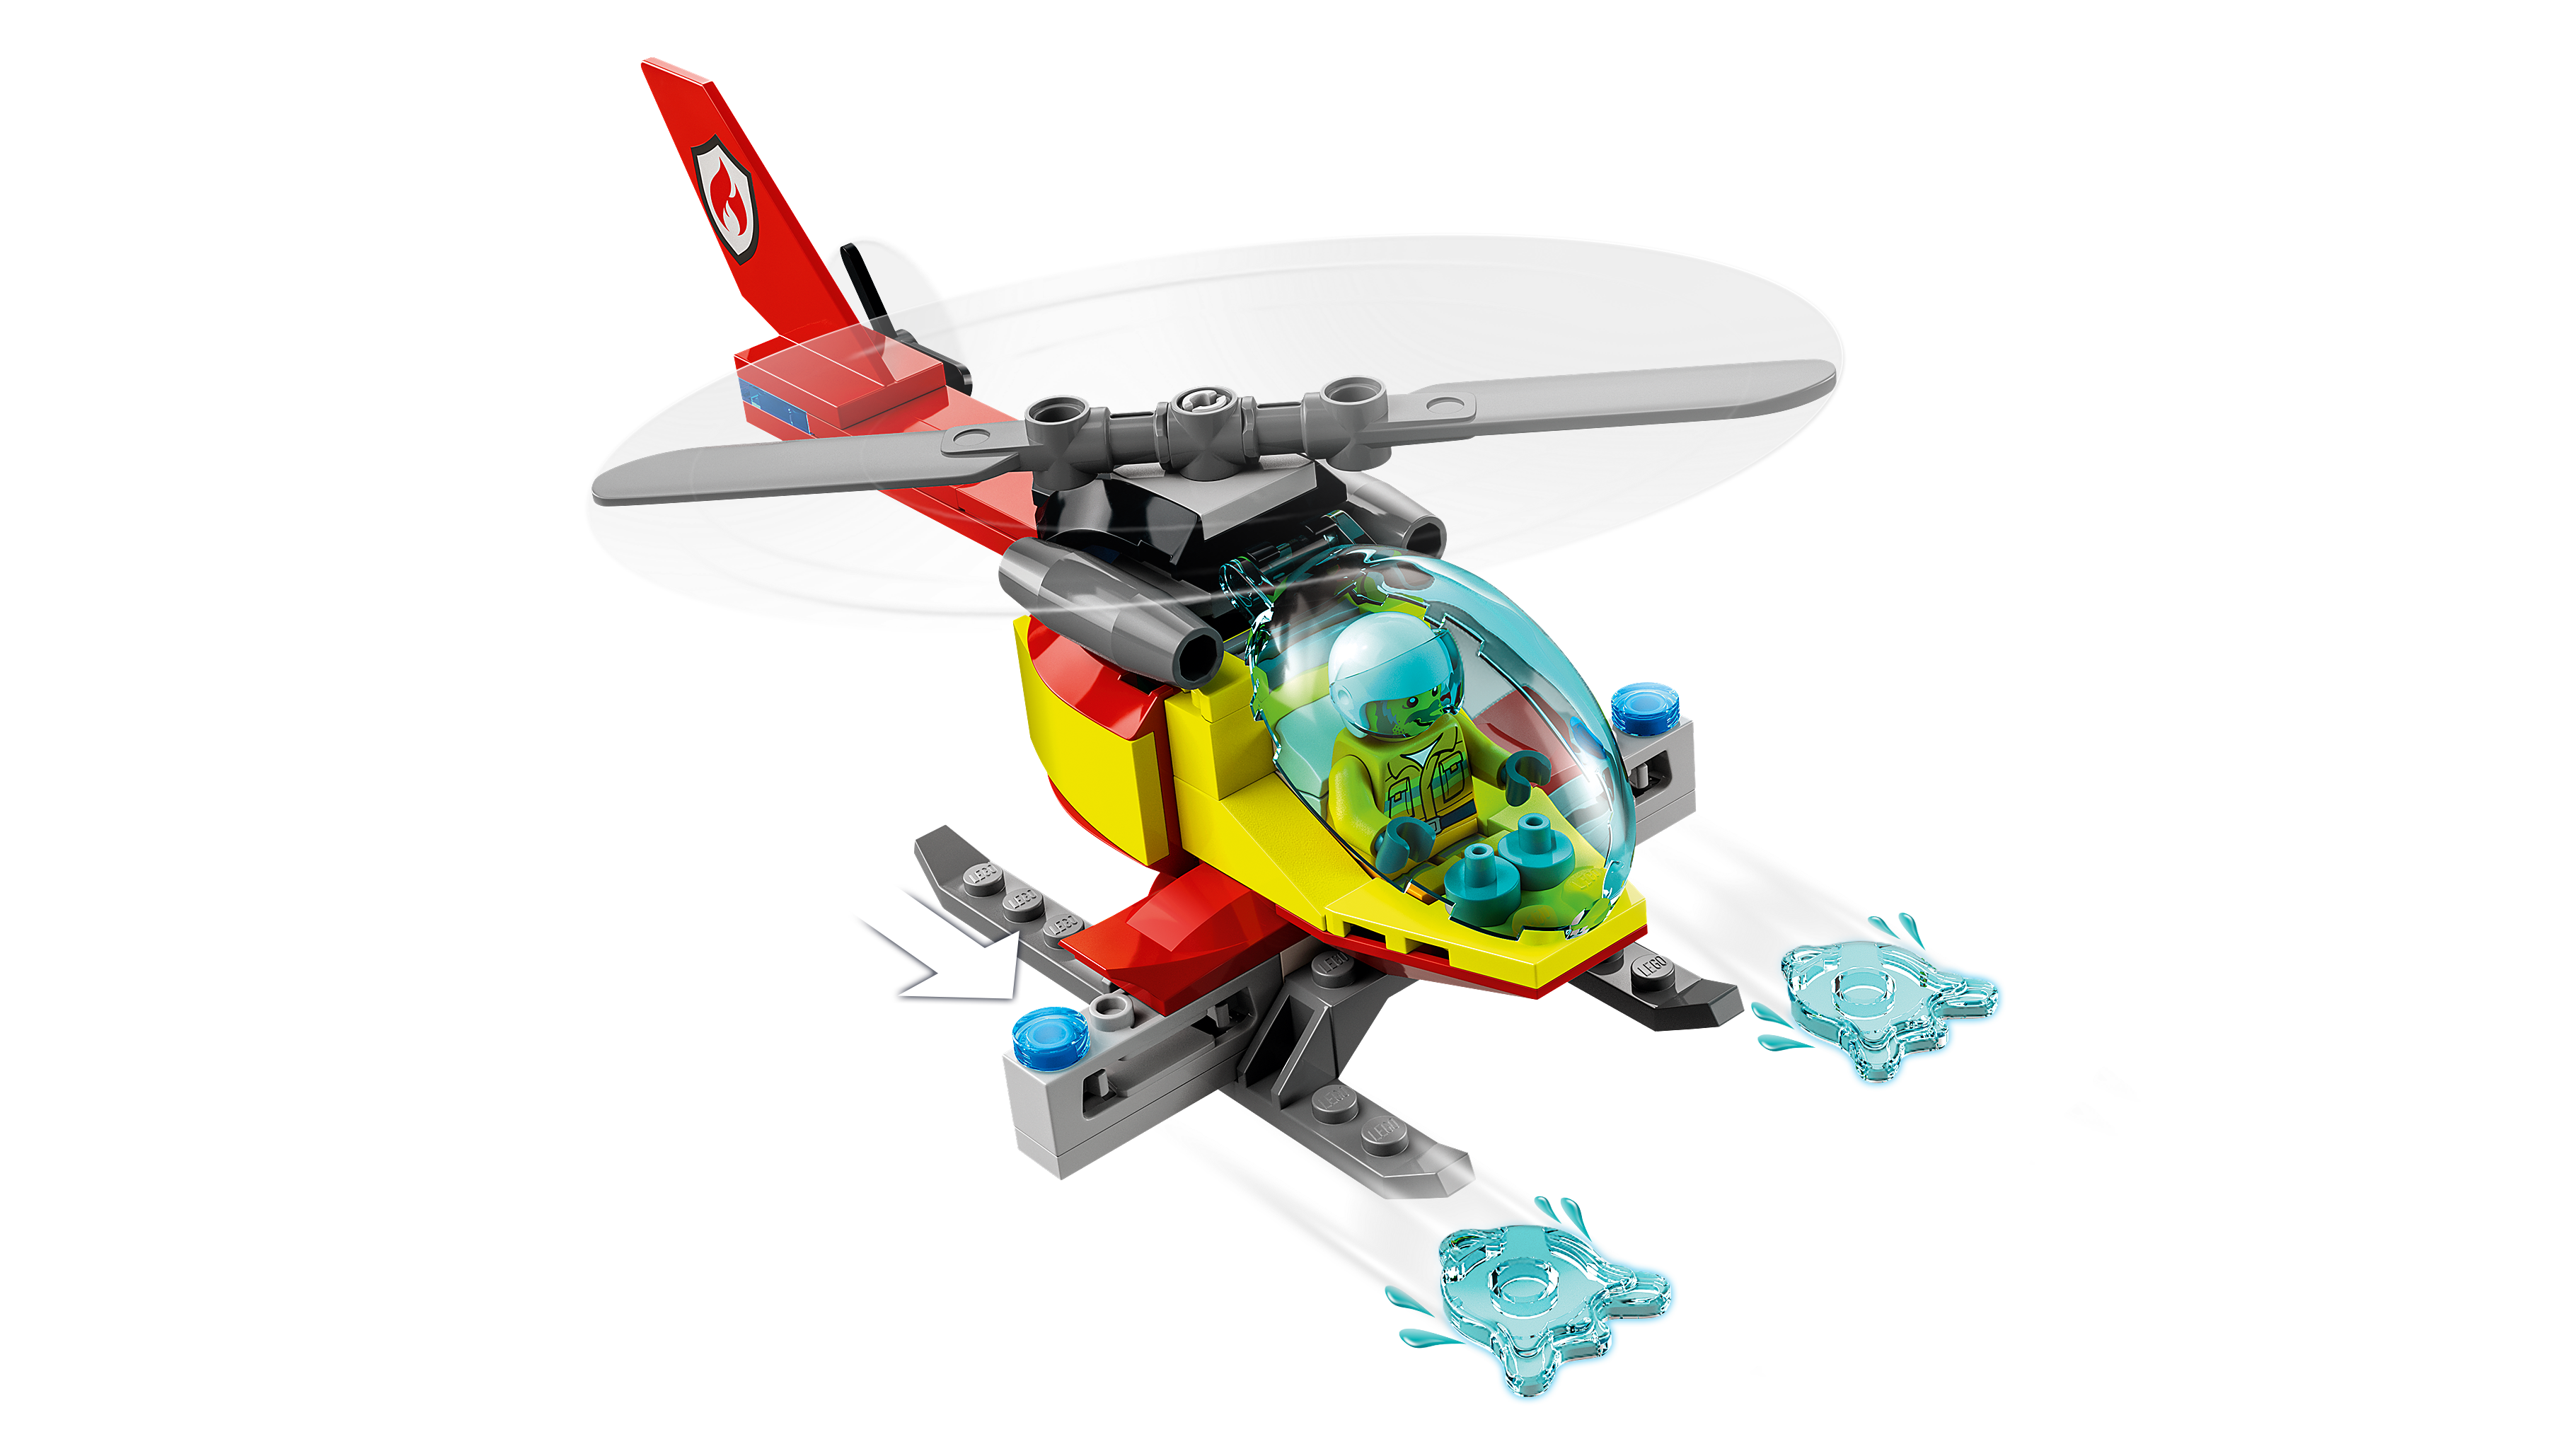 Lego 60320 Fire Station